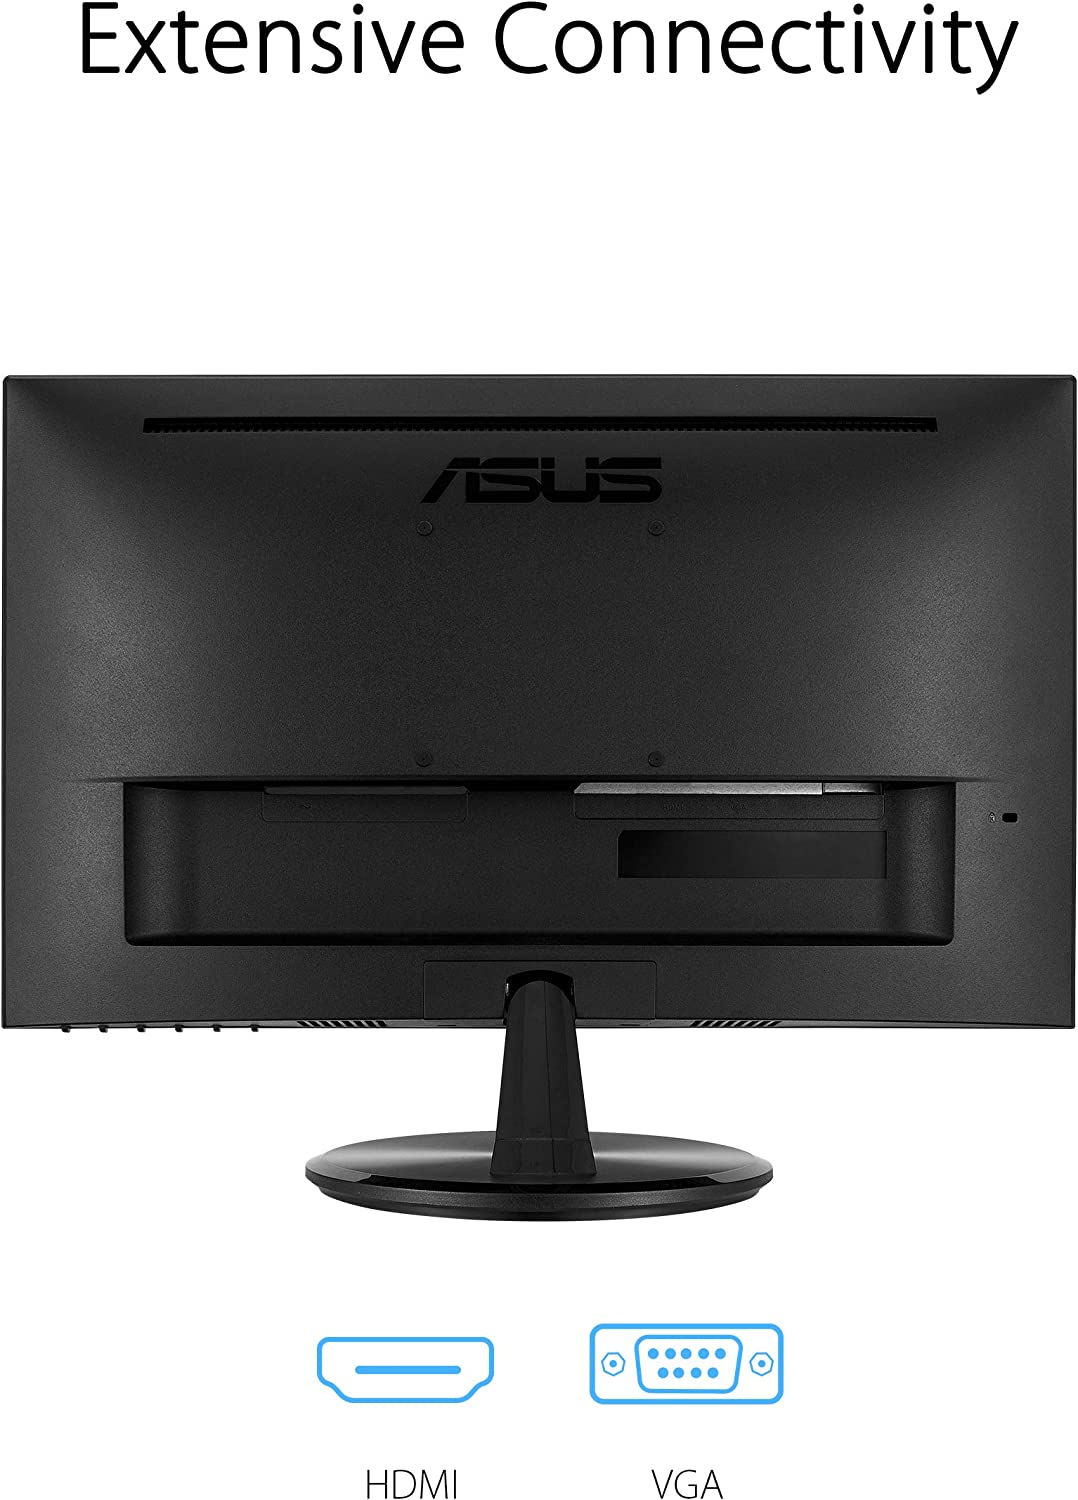 ASUS VP229HE 21.5” Monitor, 1080P Full HD, 75Hz, Eye Care